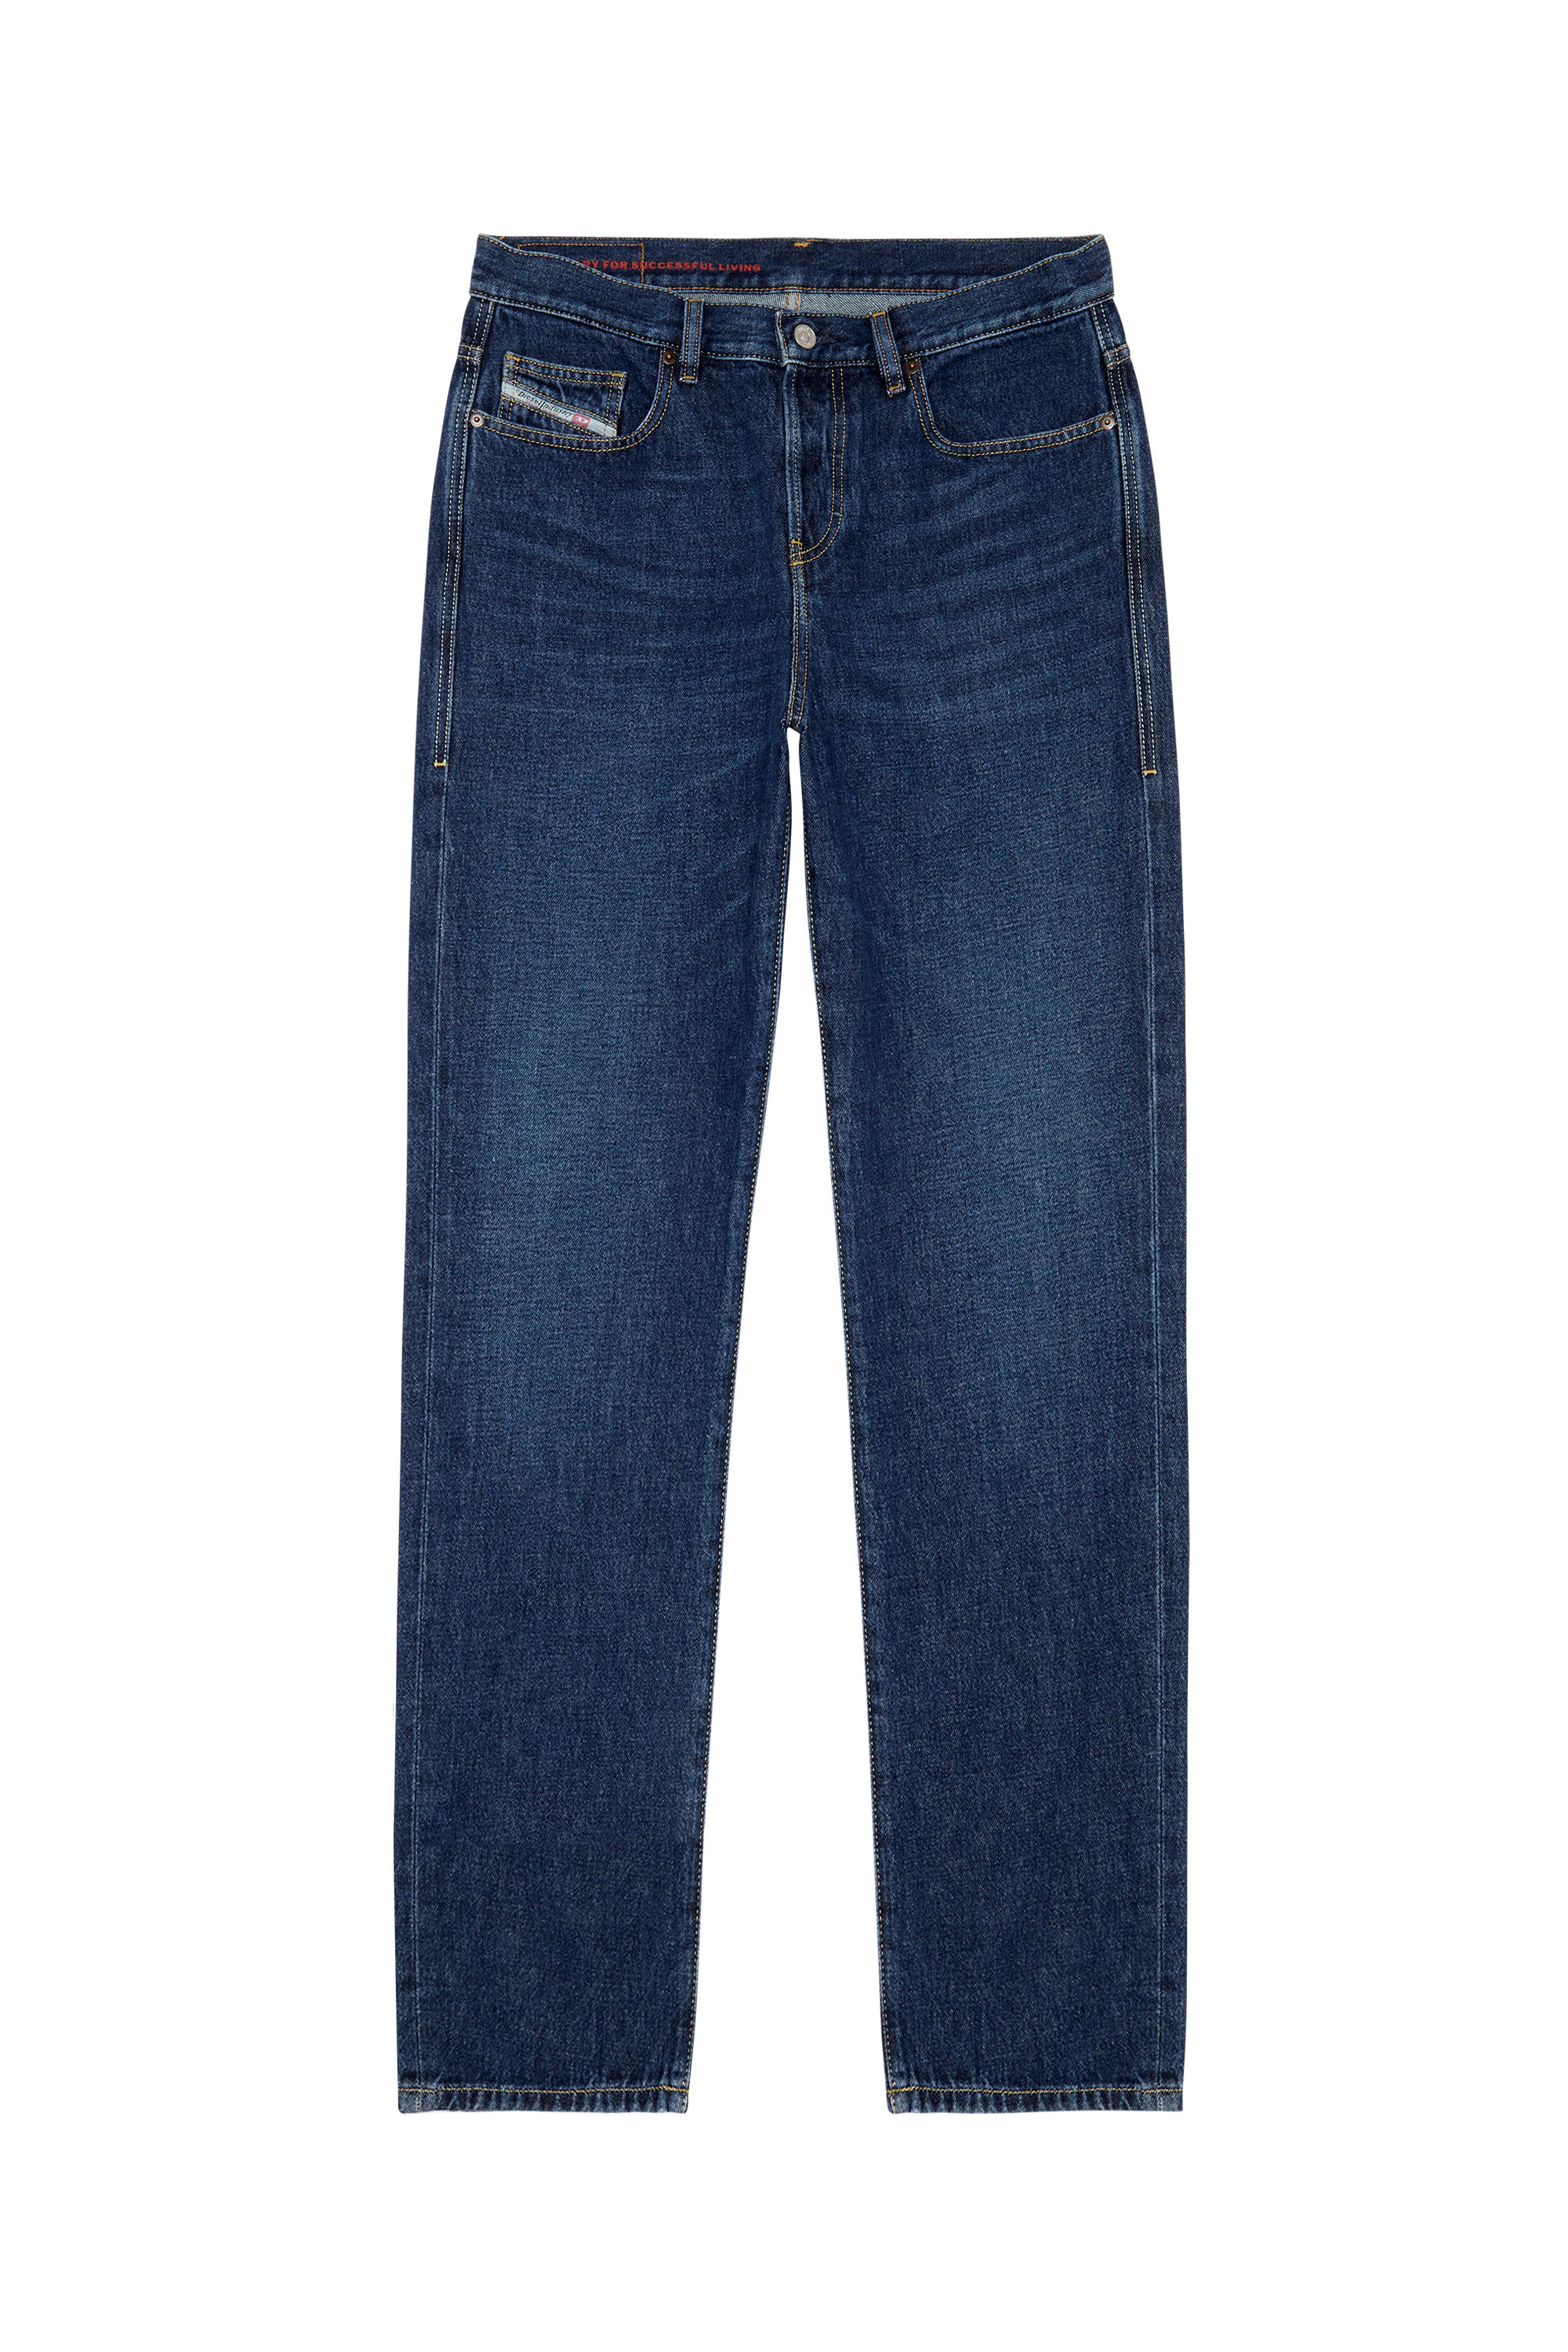 2020 D-Viker 09C03 Straight Jeans, Dark Blue